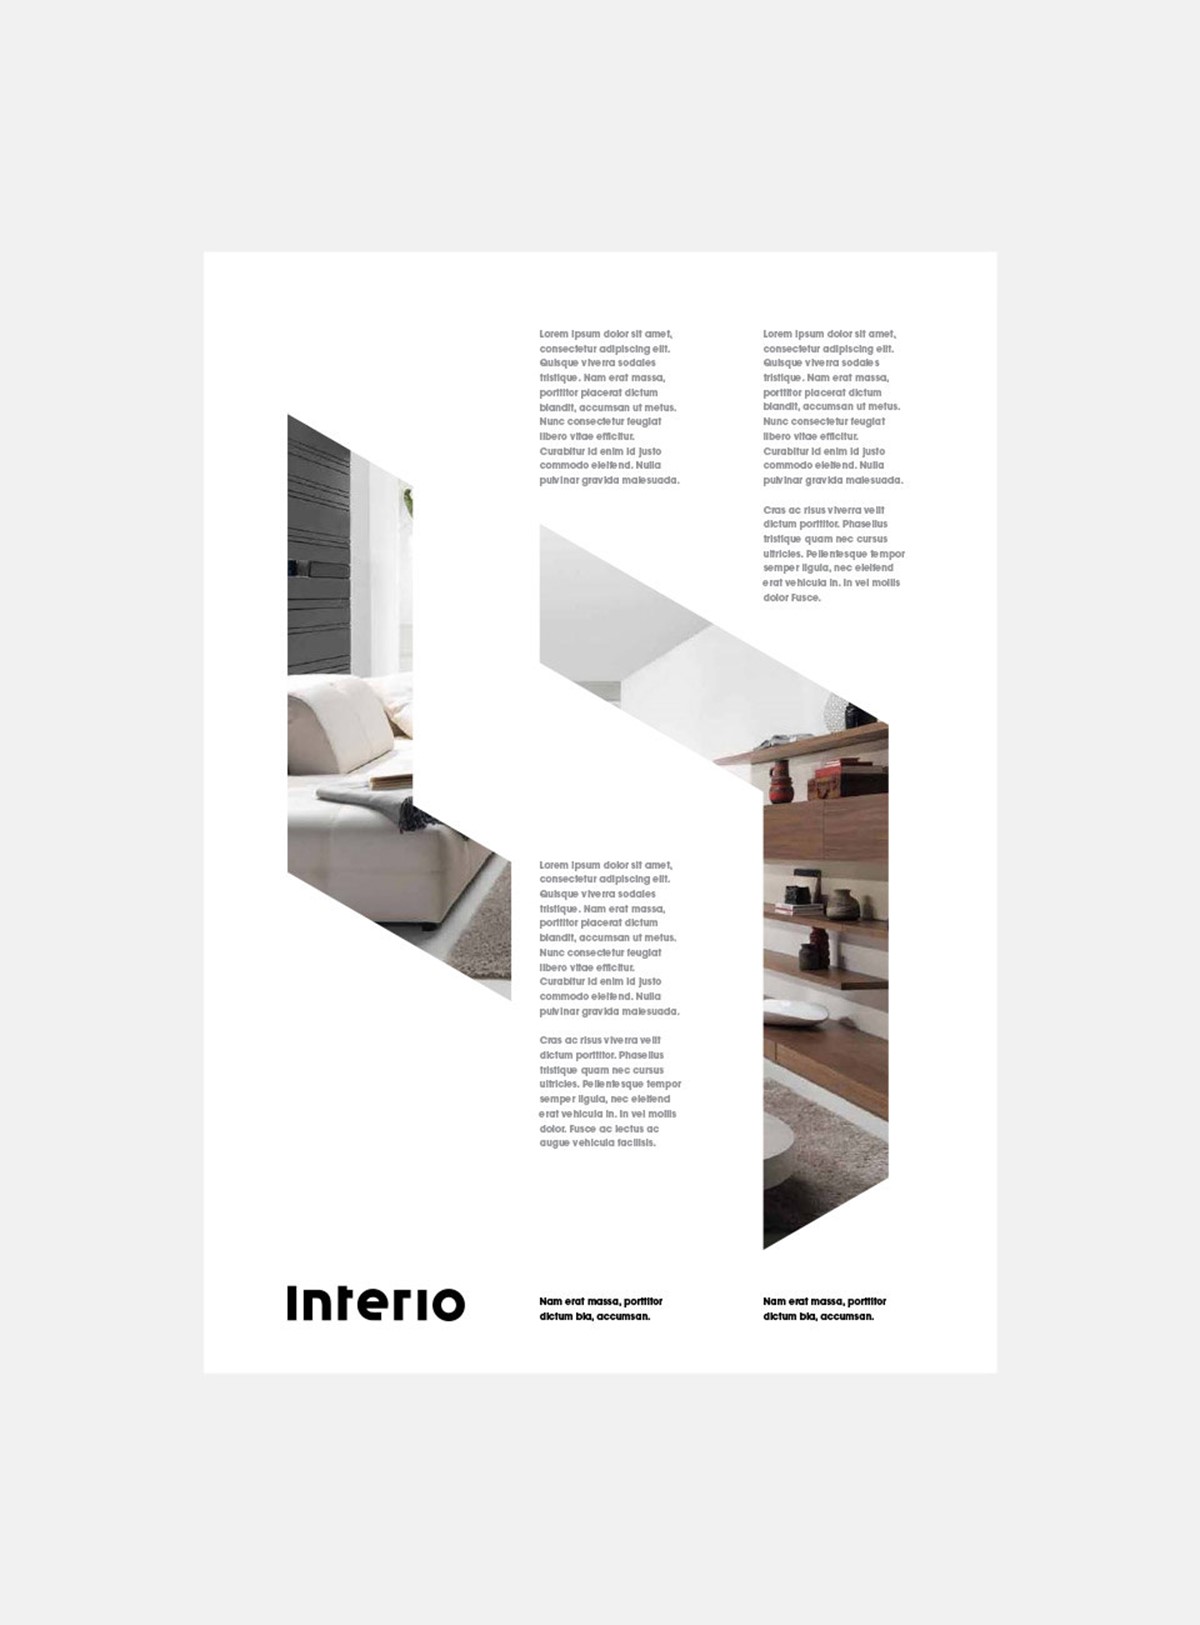 Interio. Brochure logo mask layout mock-up. Brand identity design by Superfried.